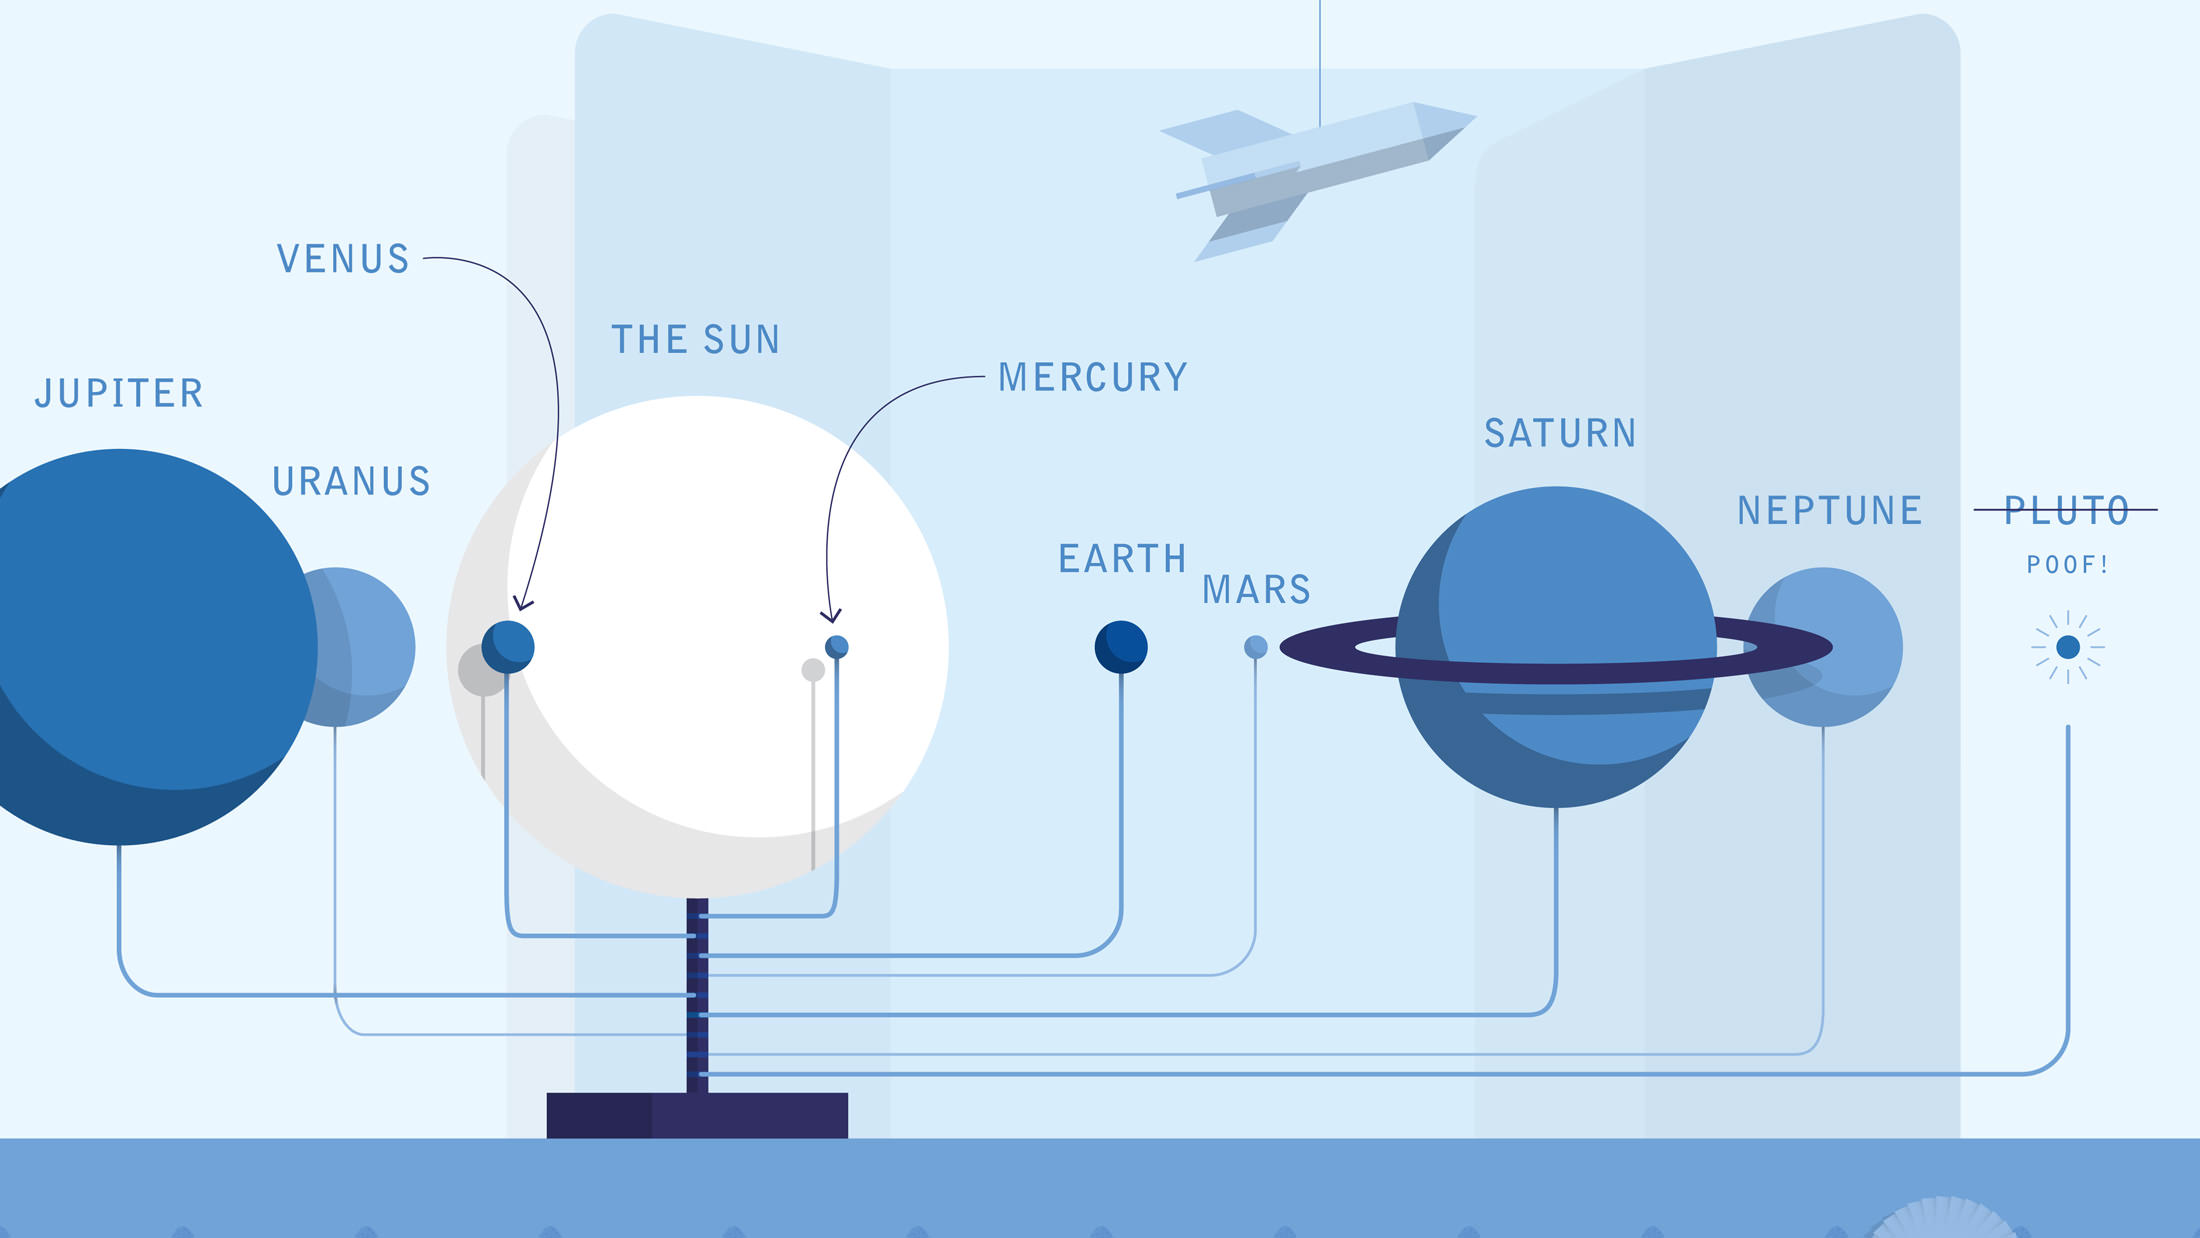 Poster image the solar system illustration. It conveyed a user's mental models.